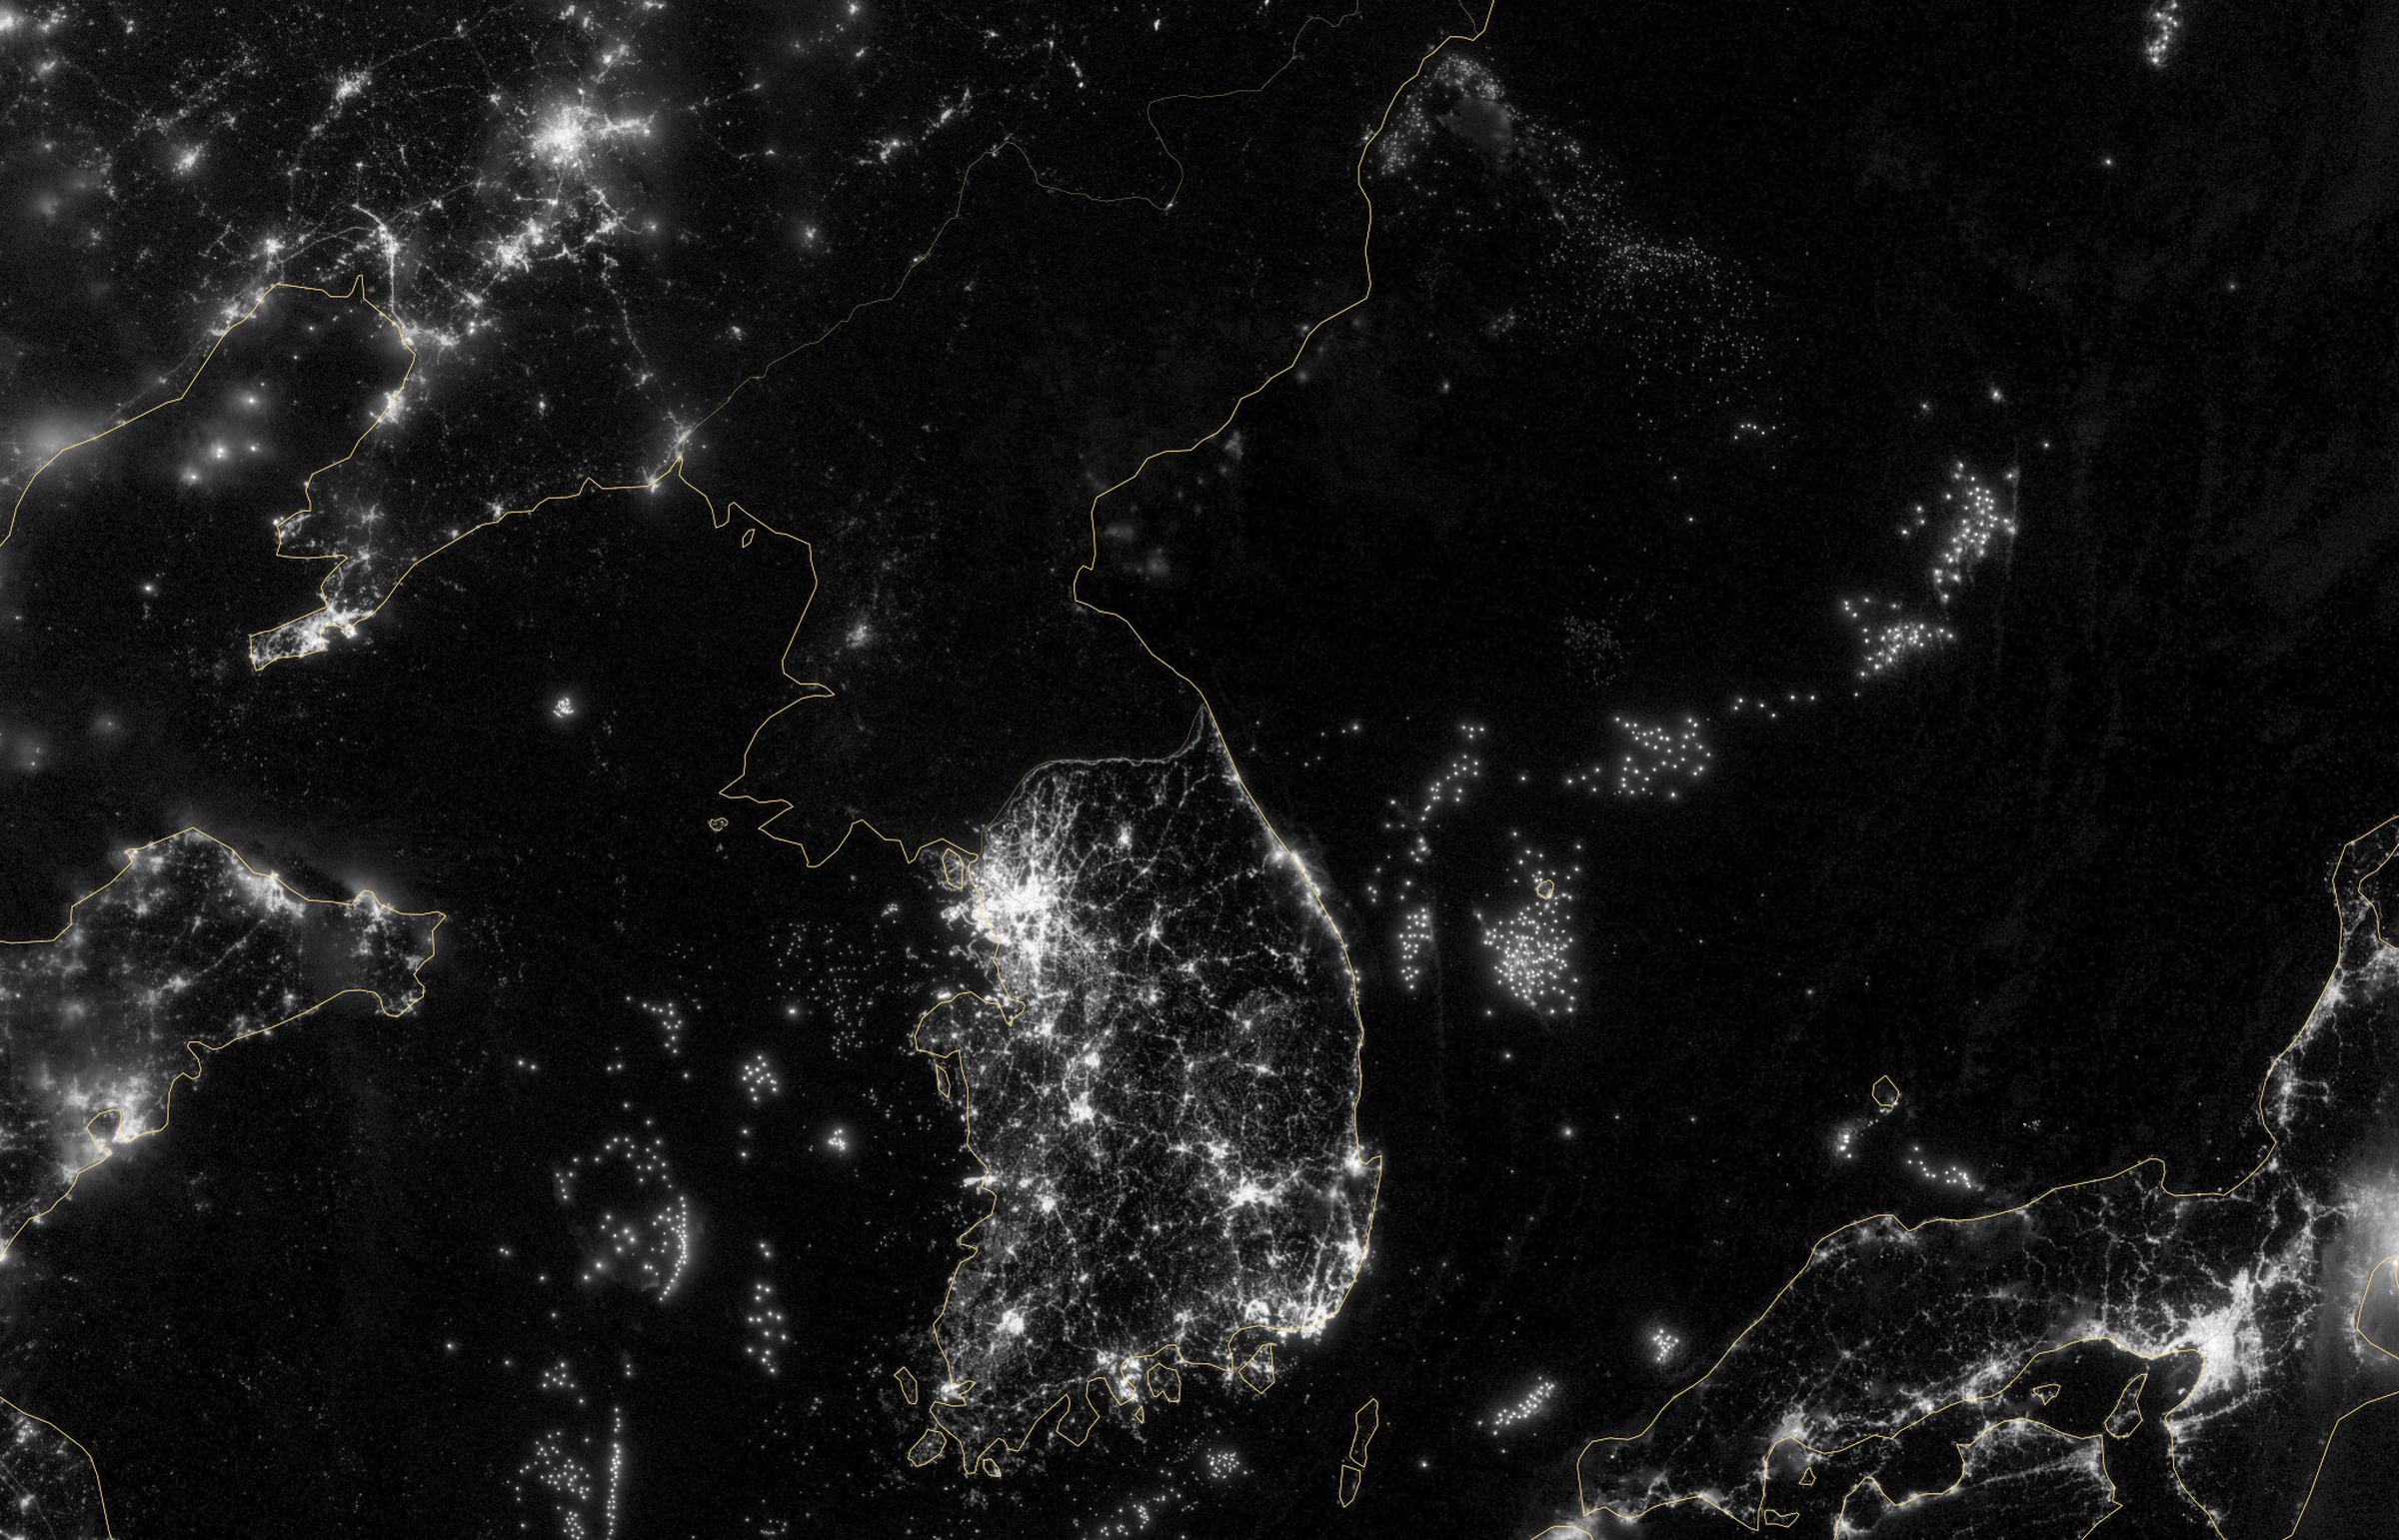 north korea night satellite (NASA)